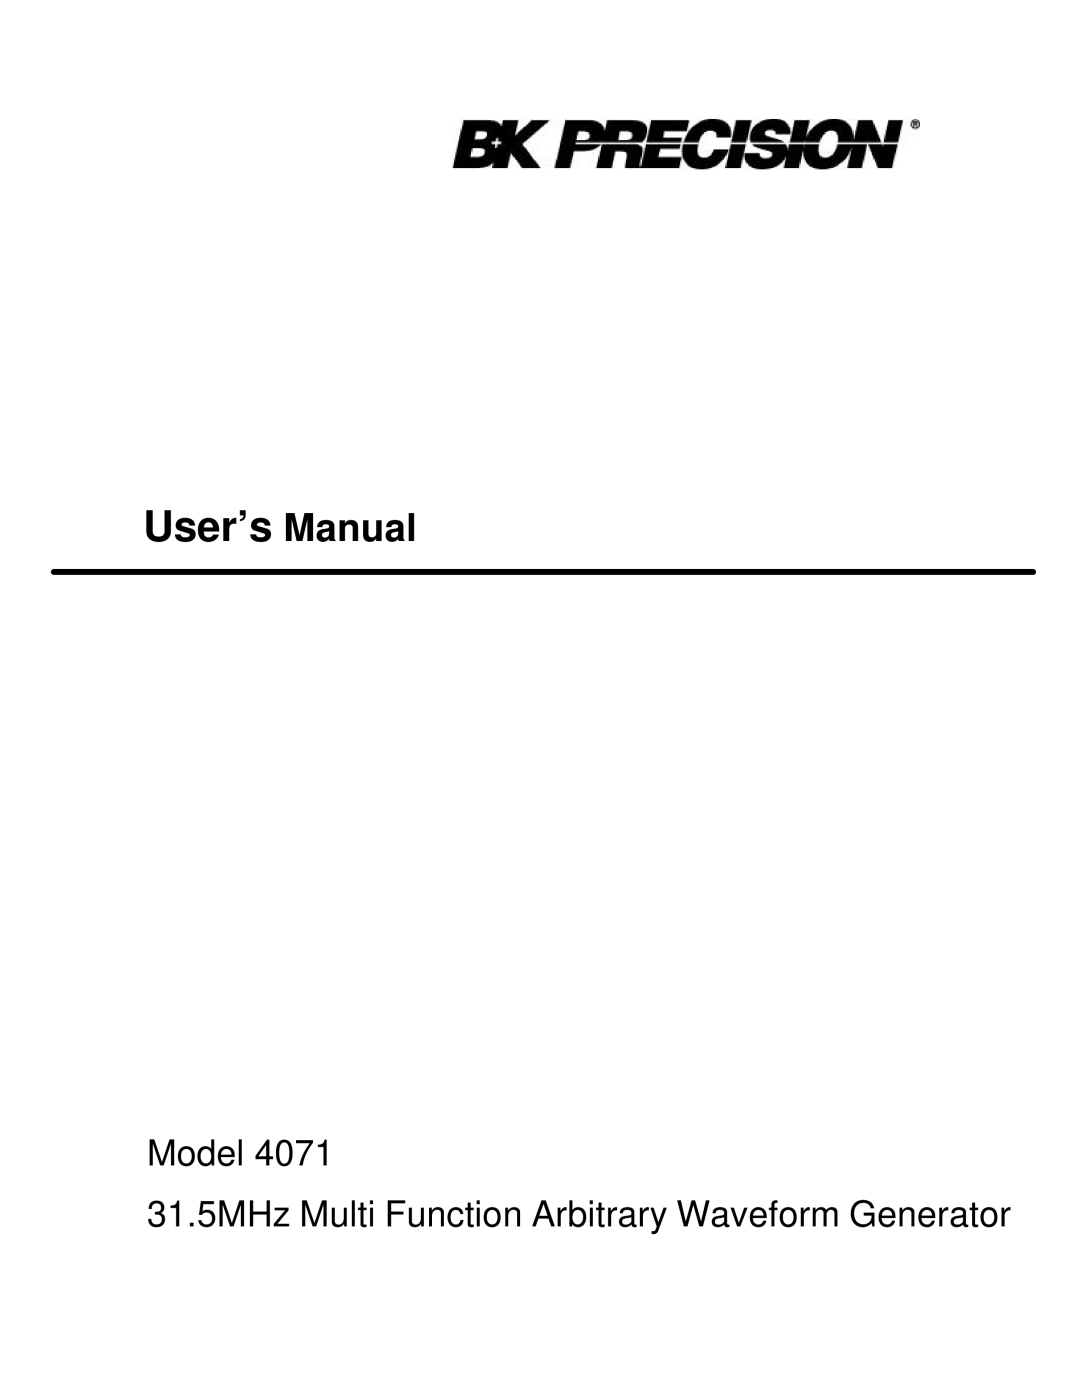 B&K 4071 user manual User’s Manual, Model 